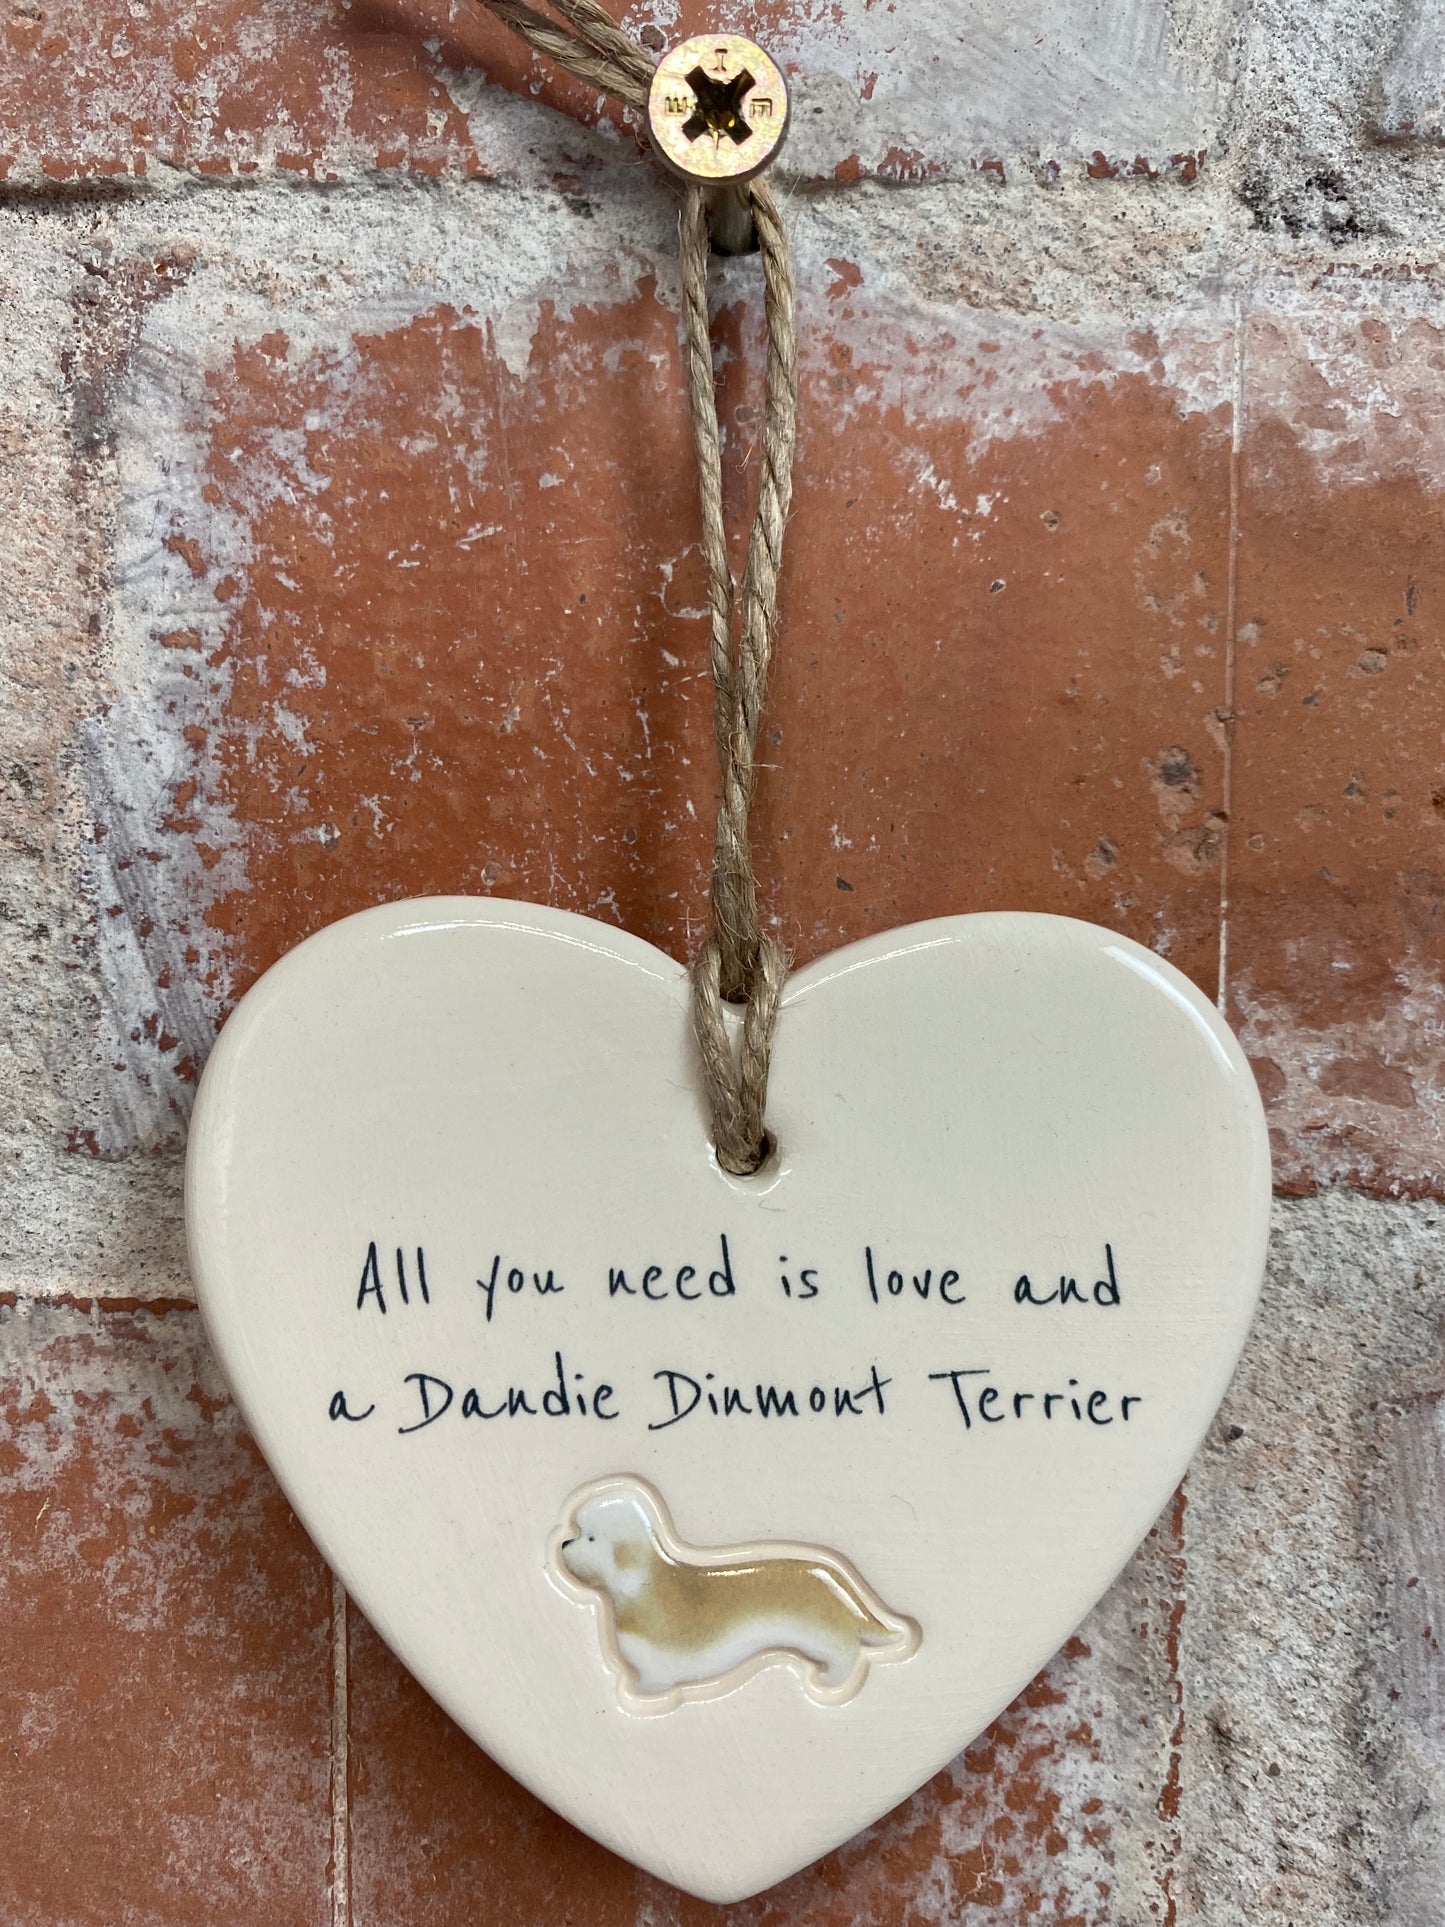 Dandie Dinmont Terrier heart